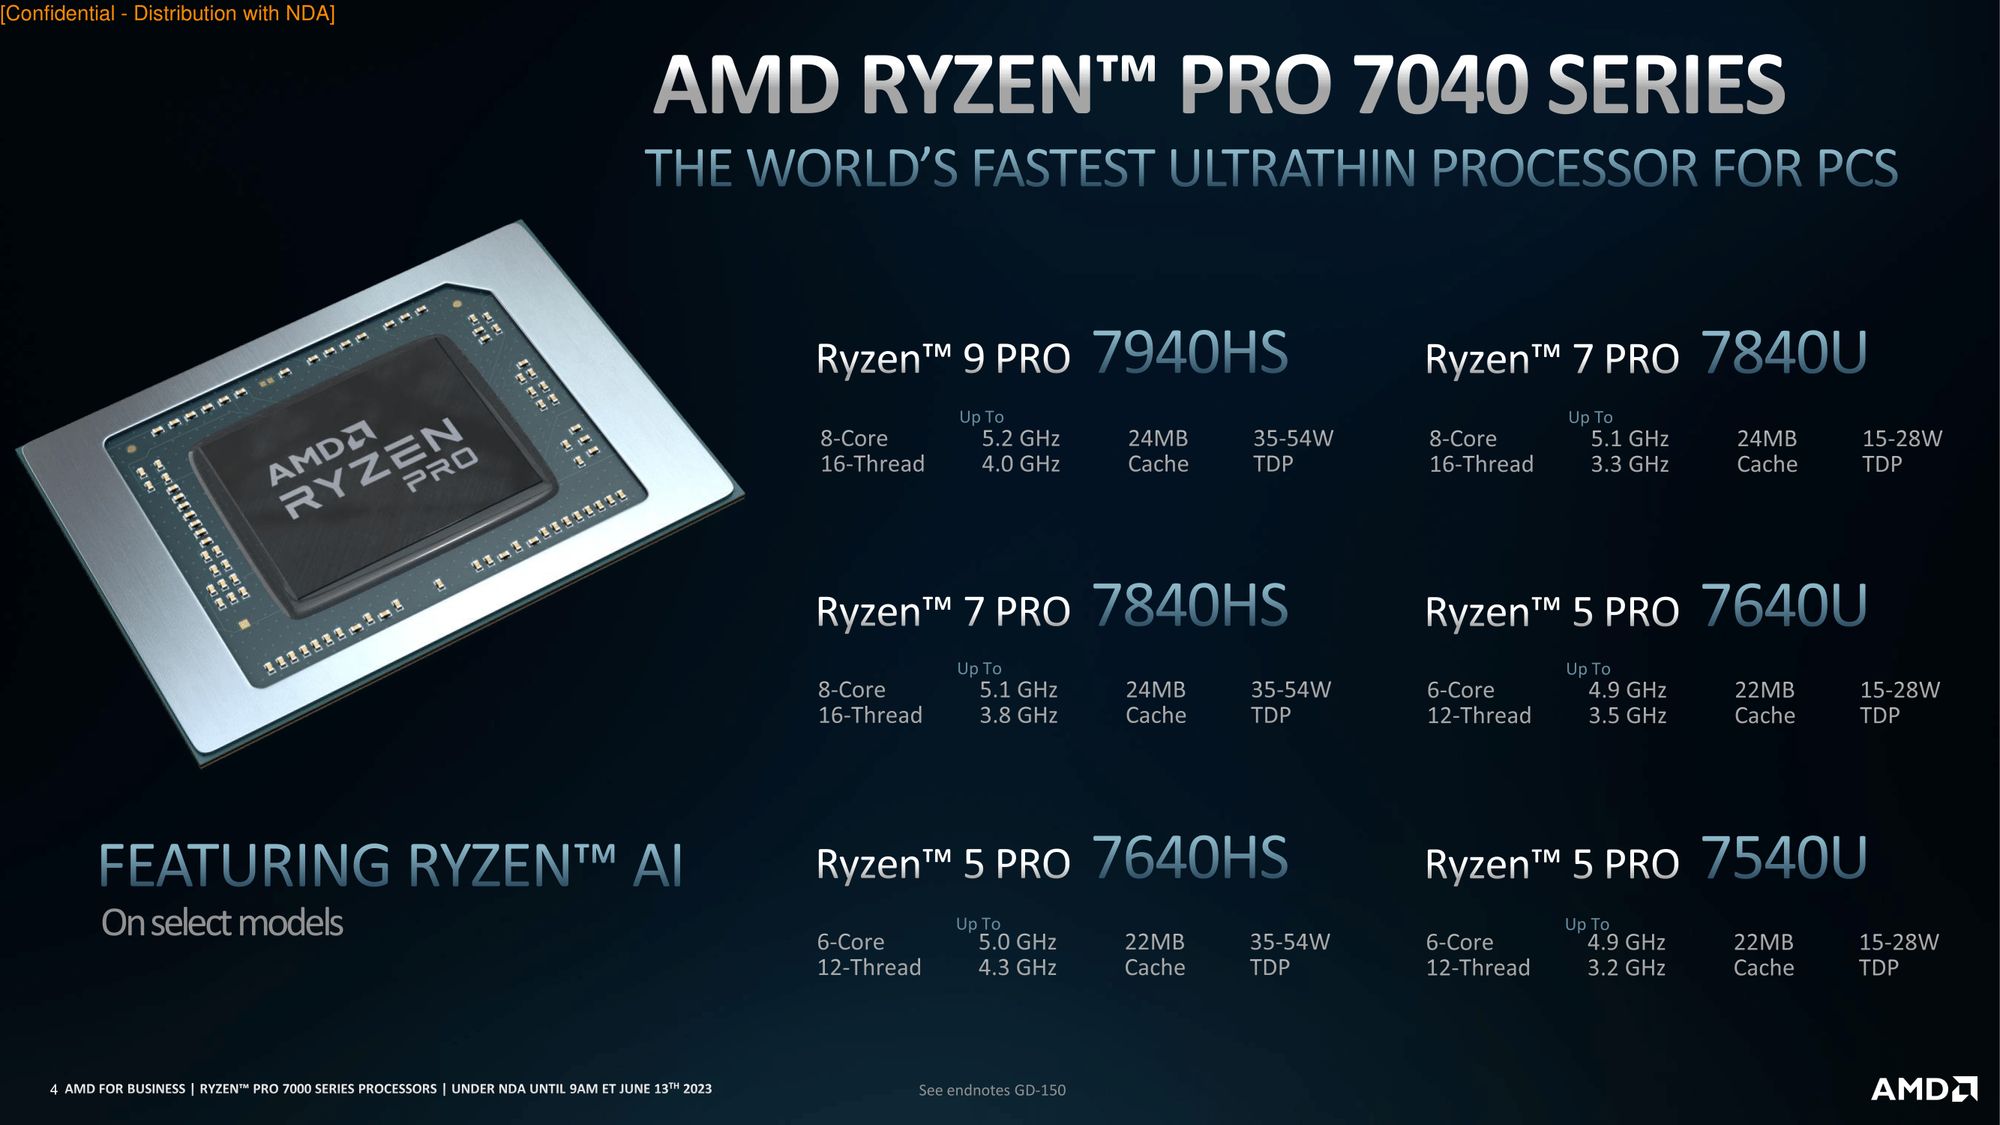 Serie AMD Ryzen Pro 7040 para portátiles